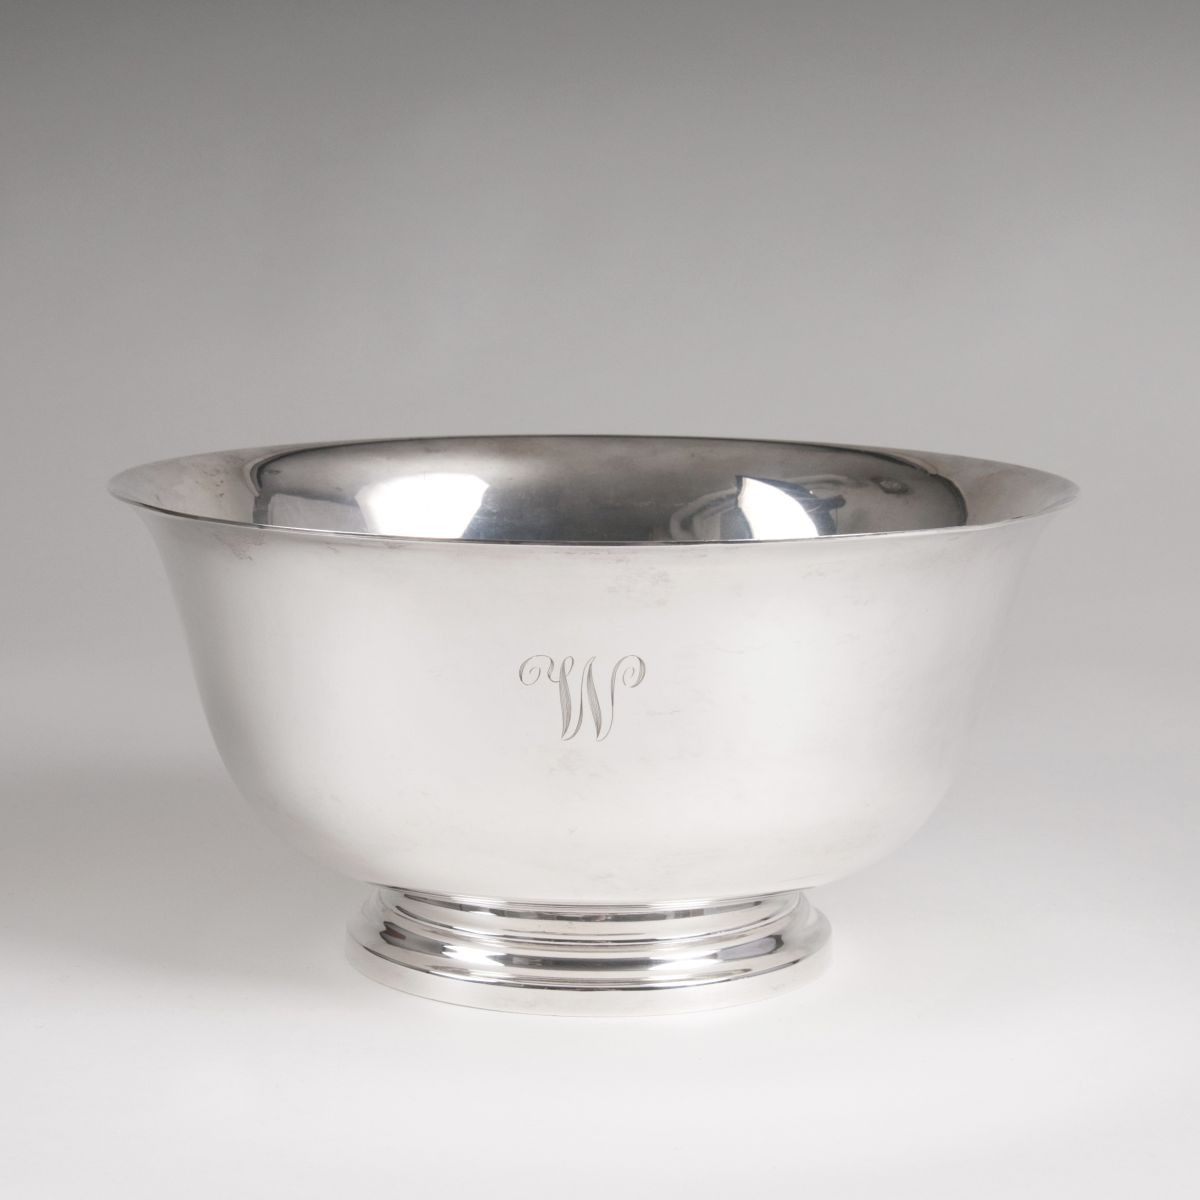 An elegant american bowl